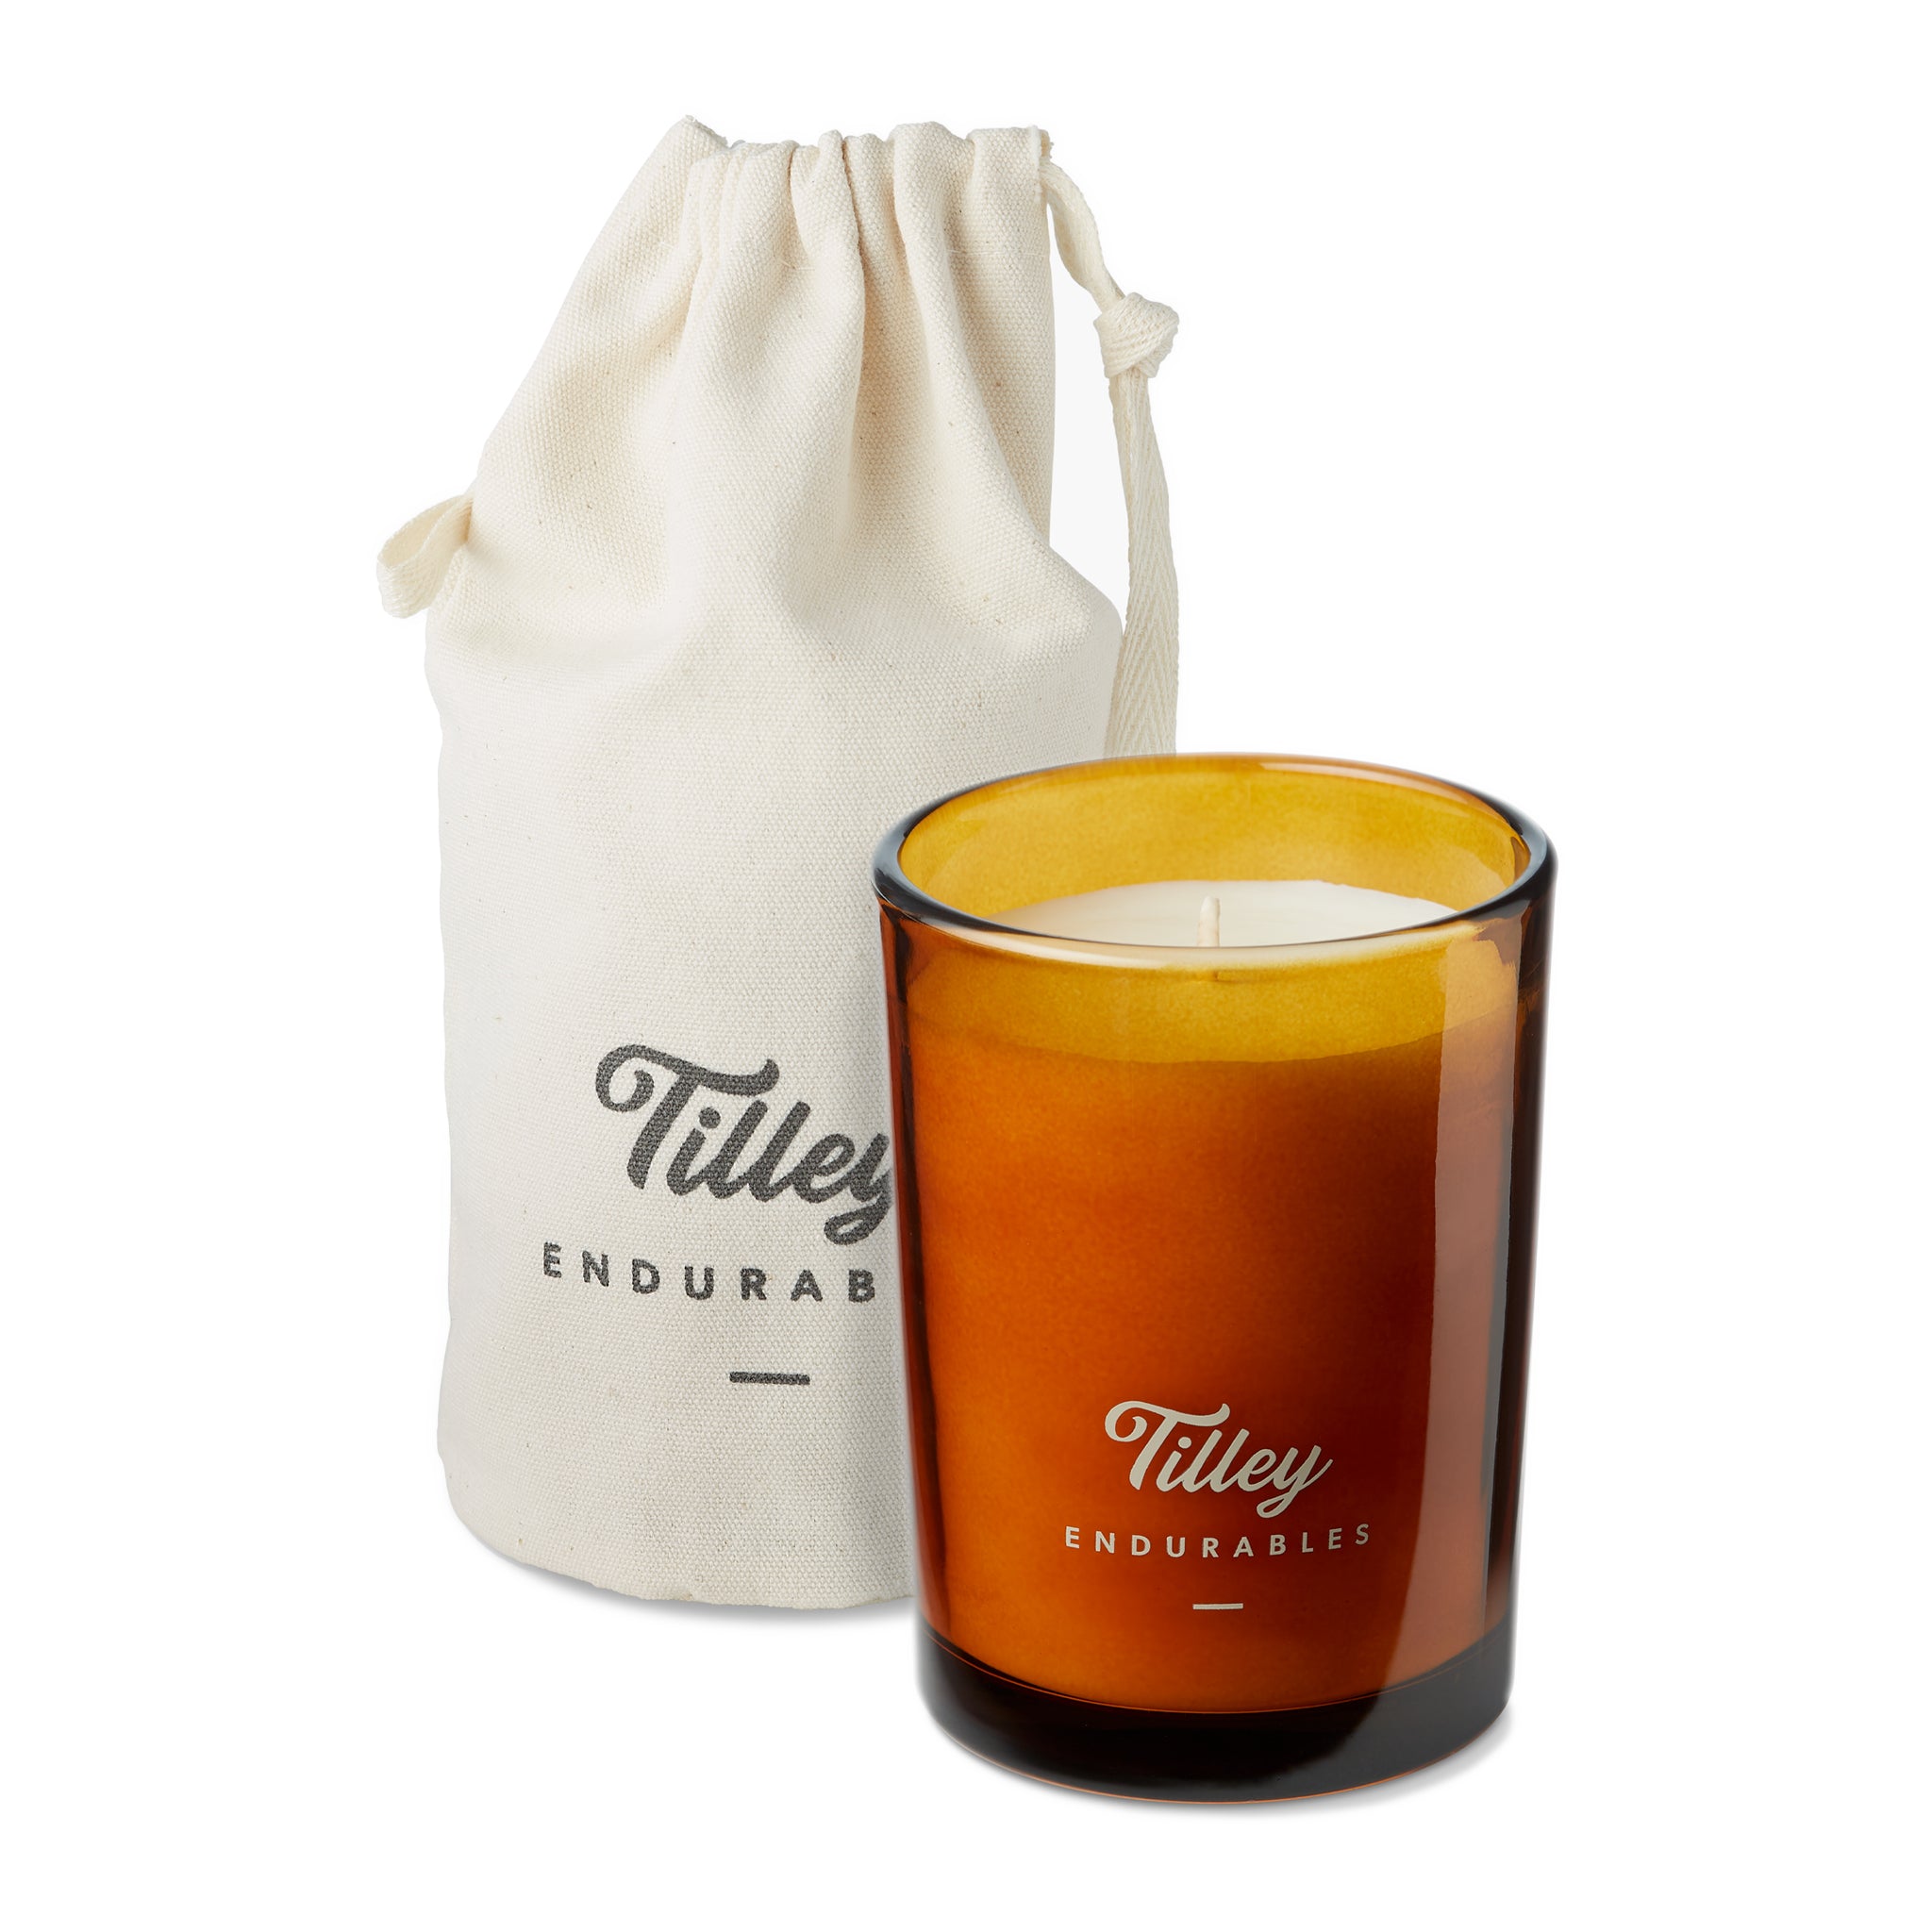 Tilley Endurables Candle